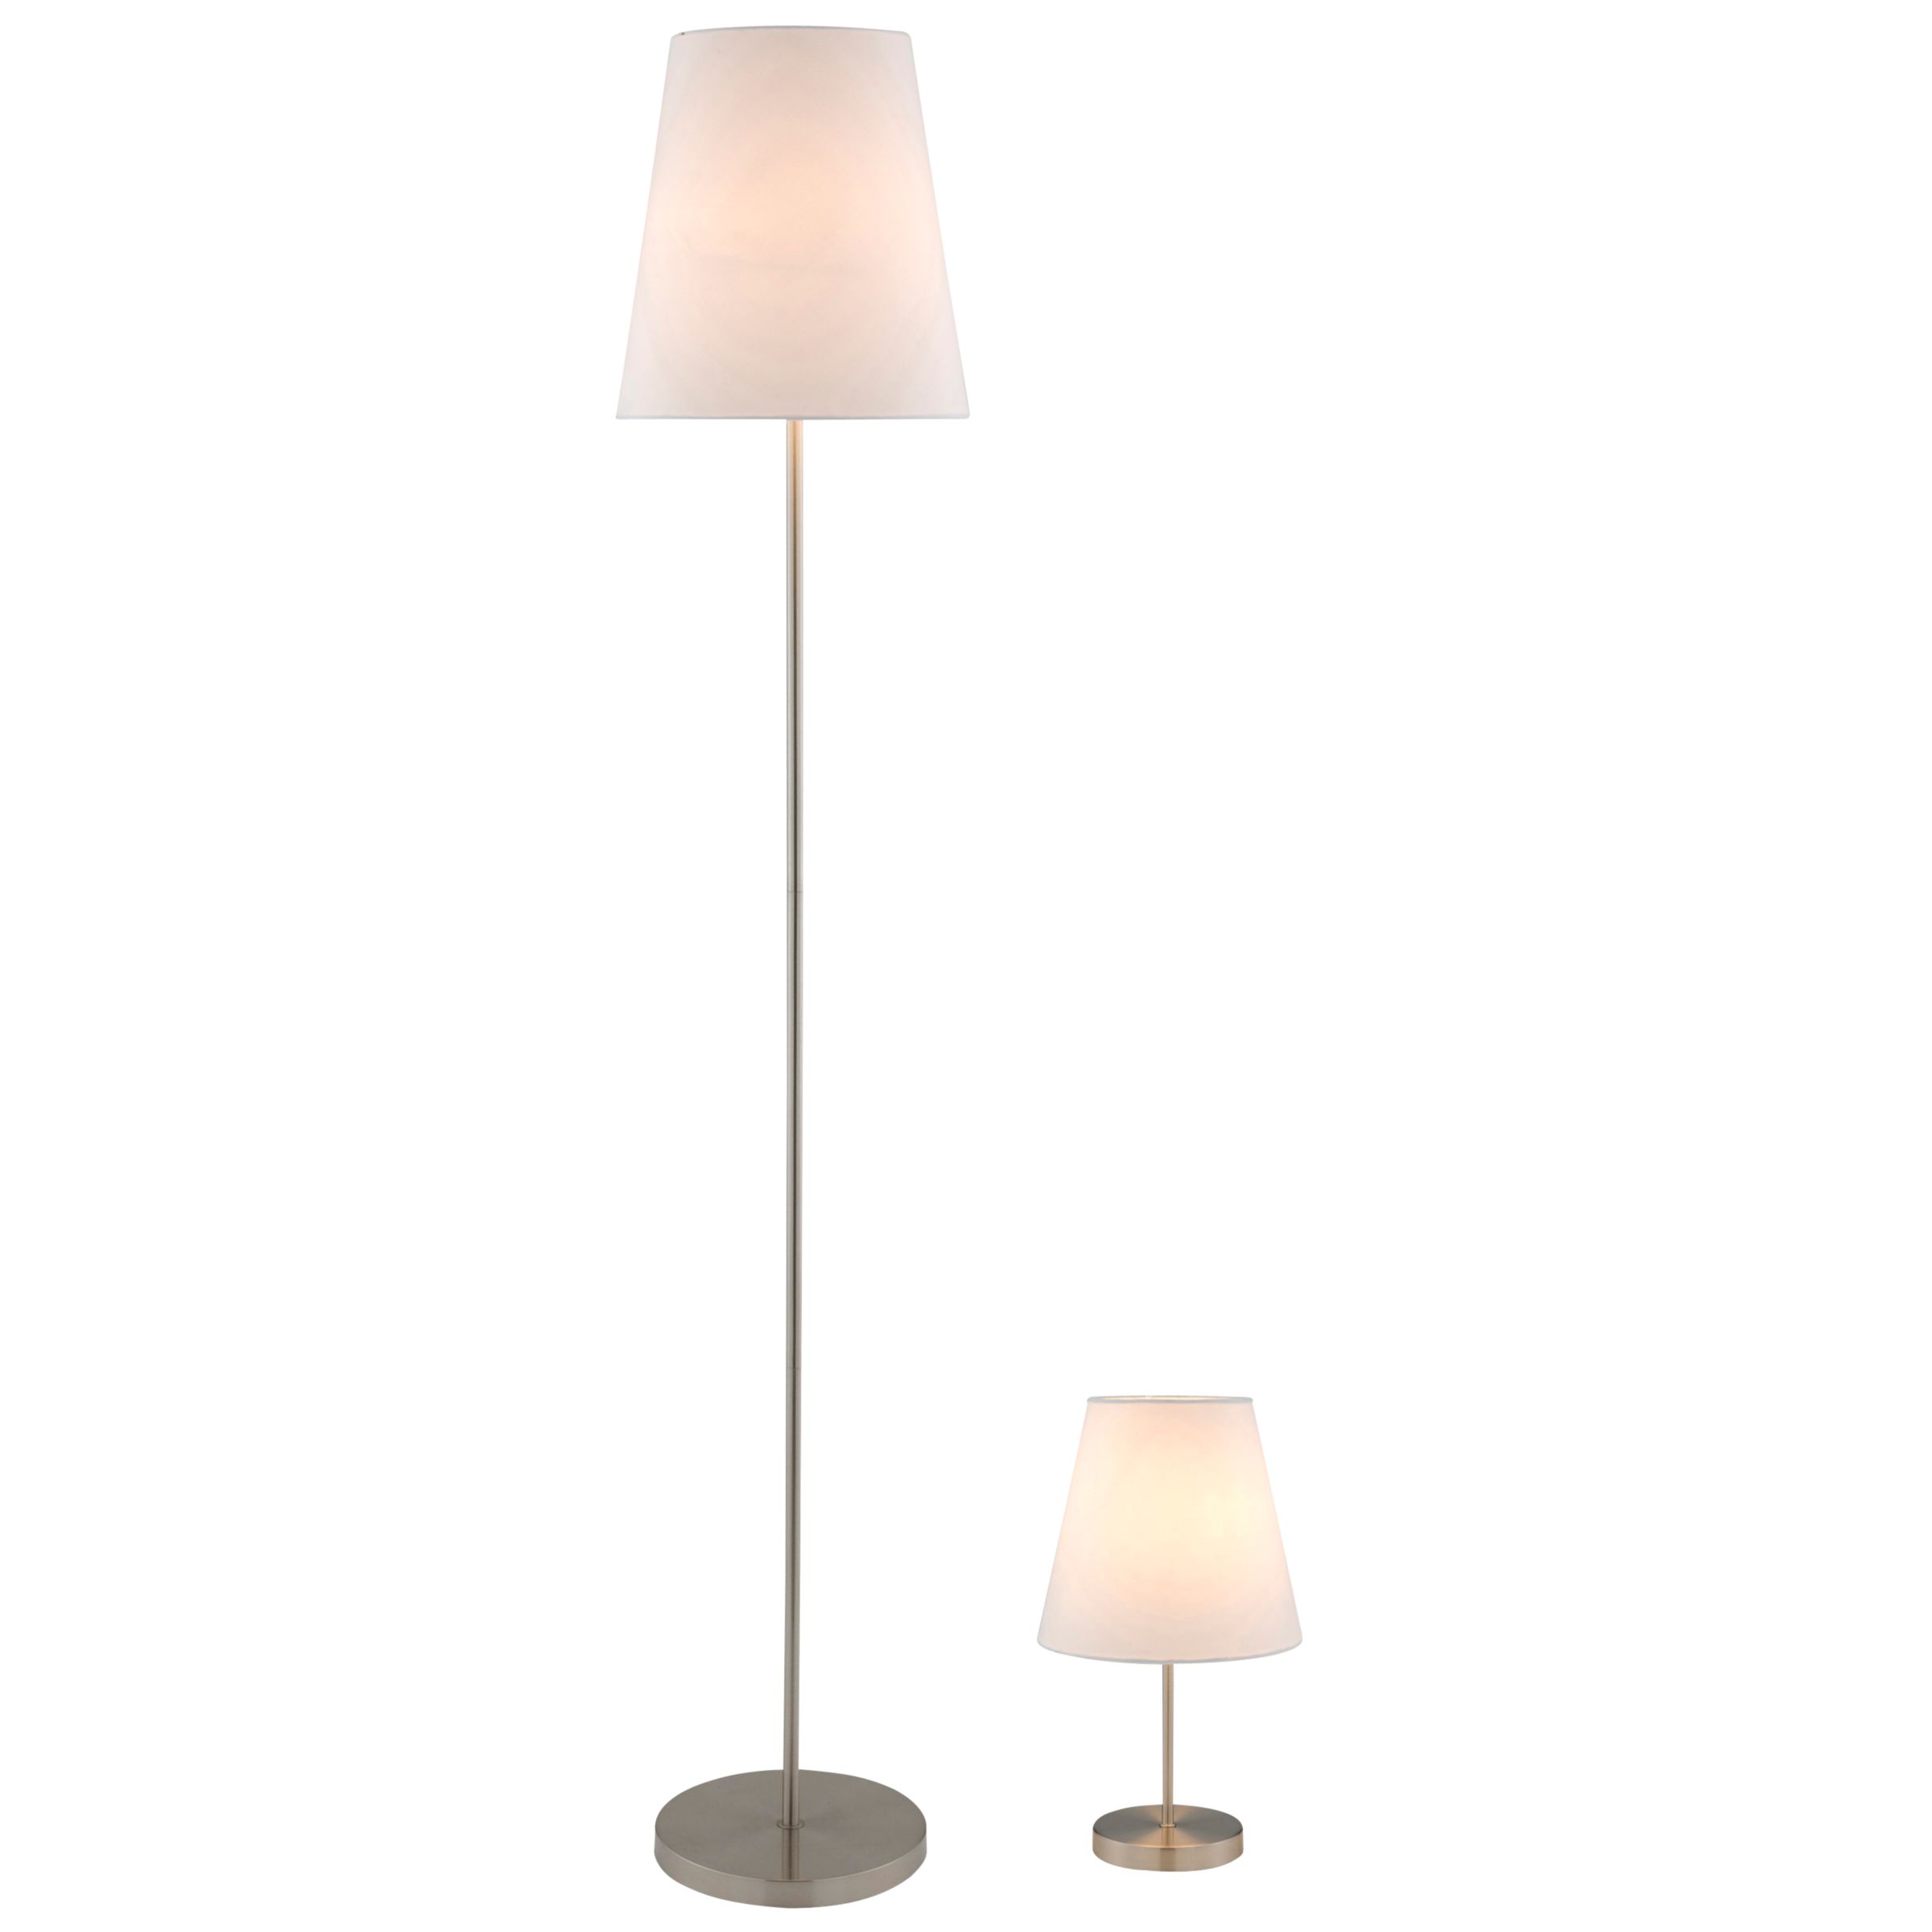 John Lewis Shivanl Table and Floor Lamp Duo